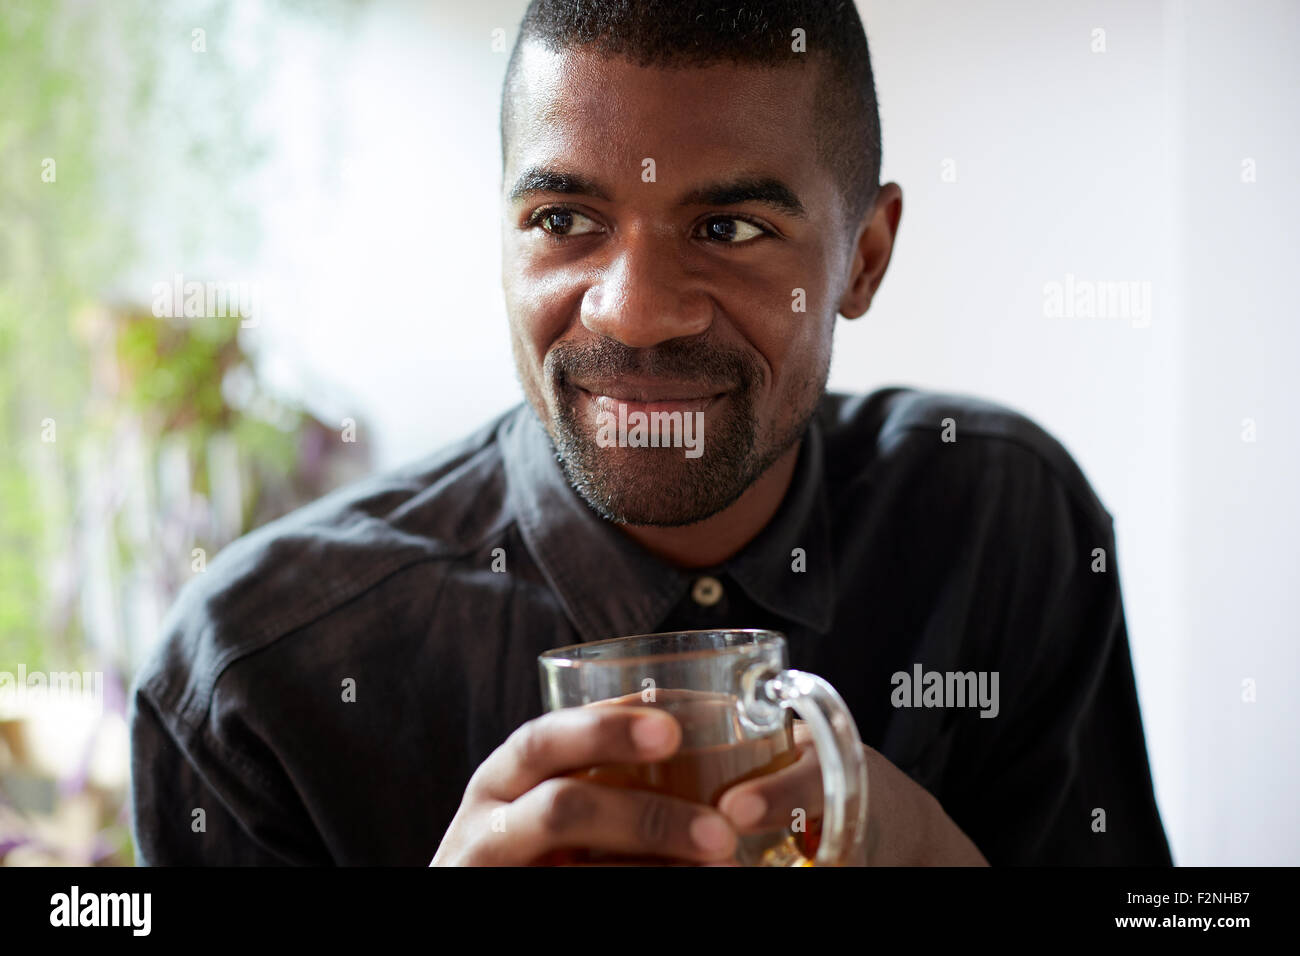 Black man drinking cup of tea Stock Photo